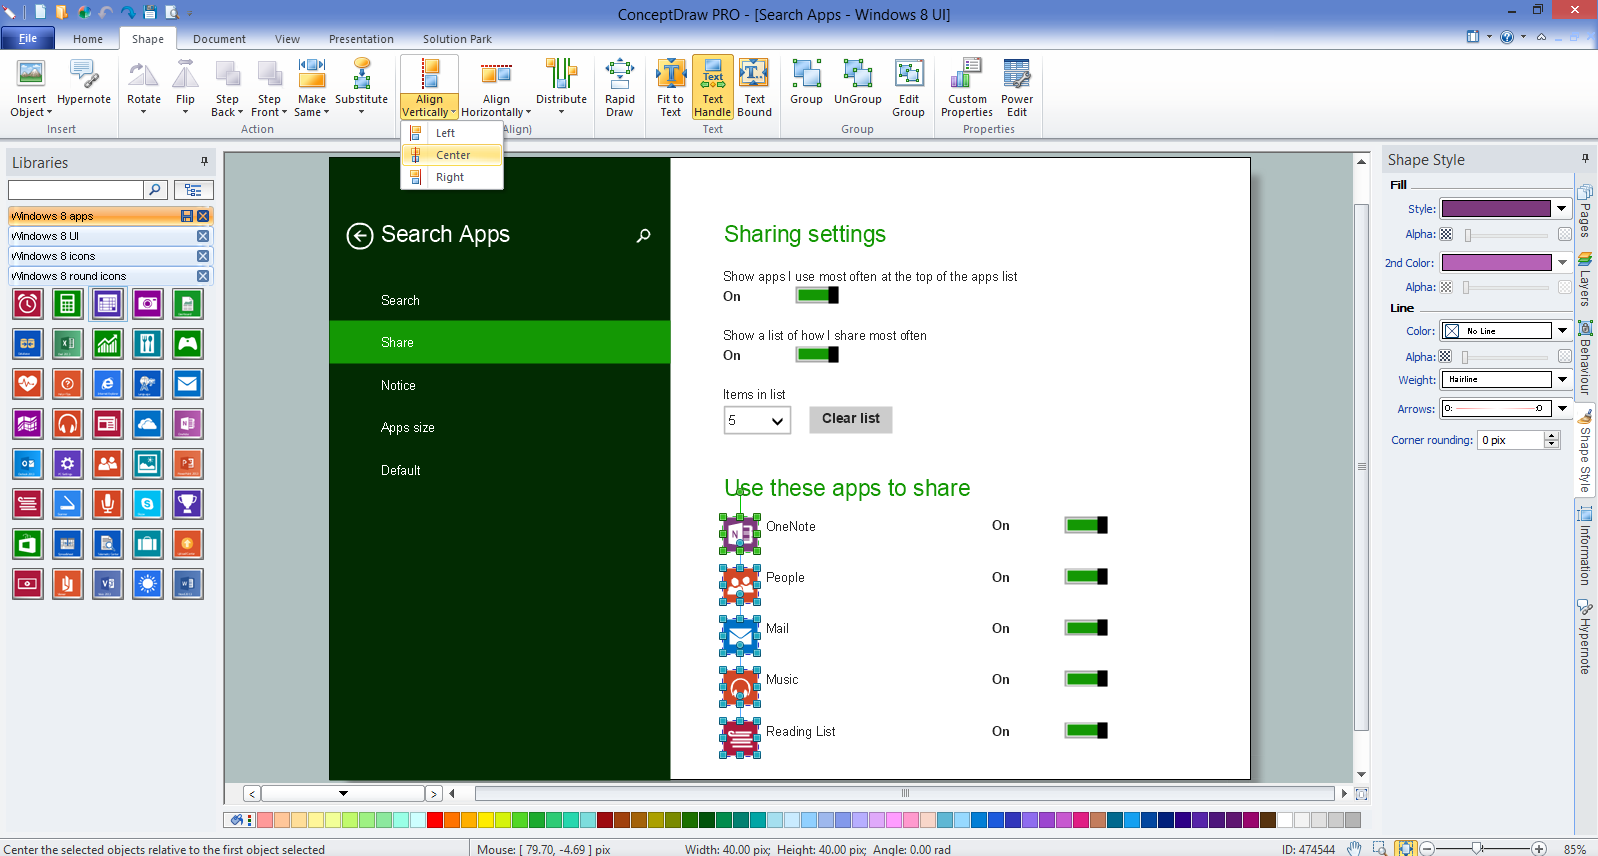 Windows 8 Free Download